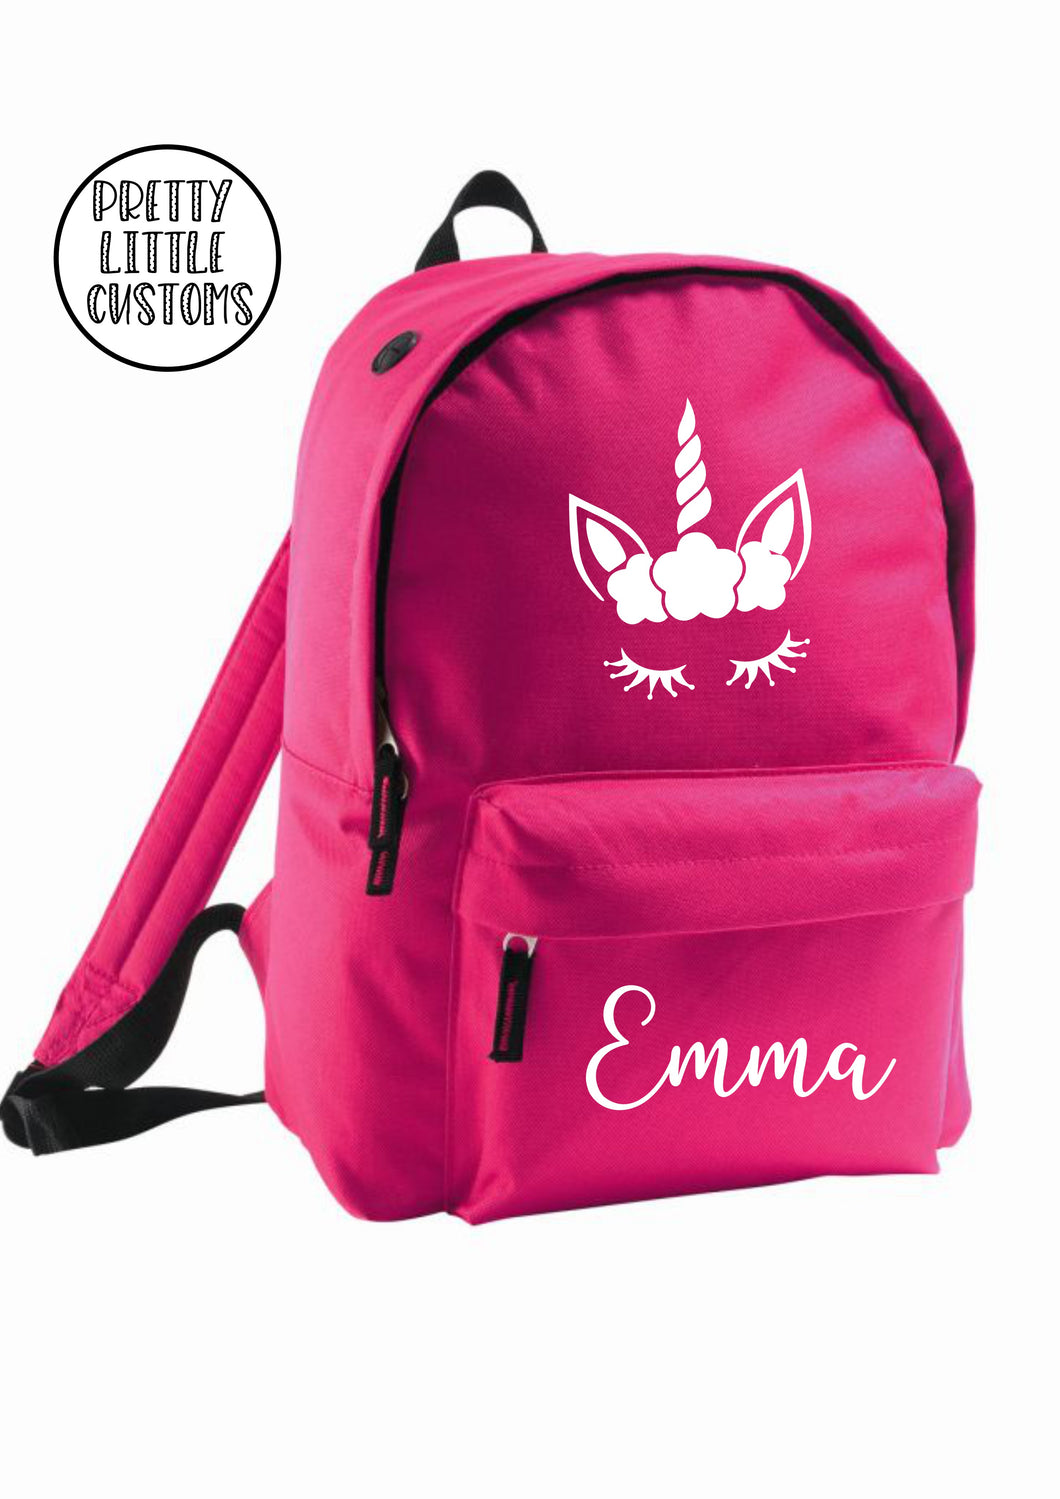 Personalised kids name rucksack/backpack/school bag - unicorn - bright pink